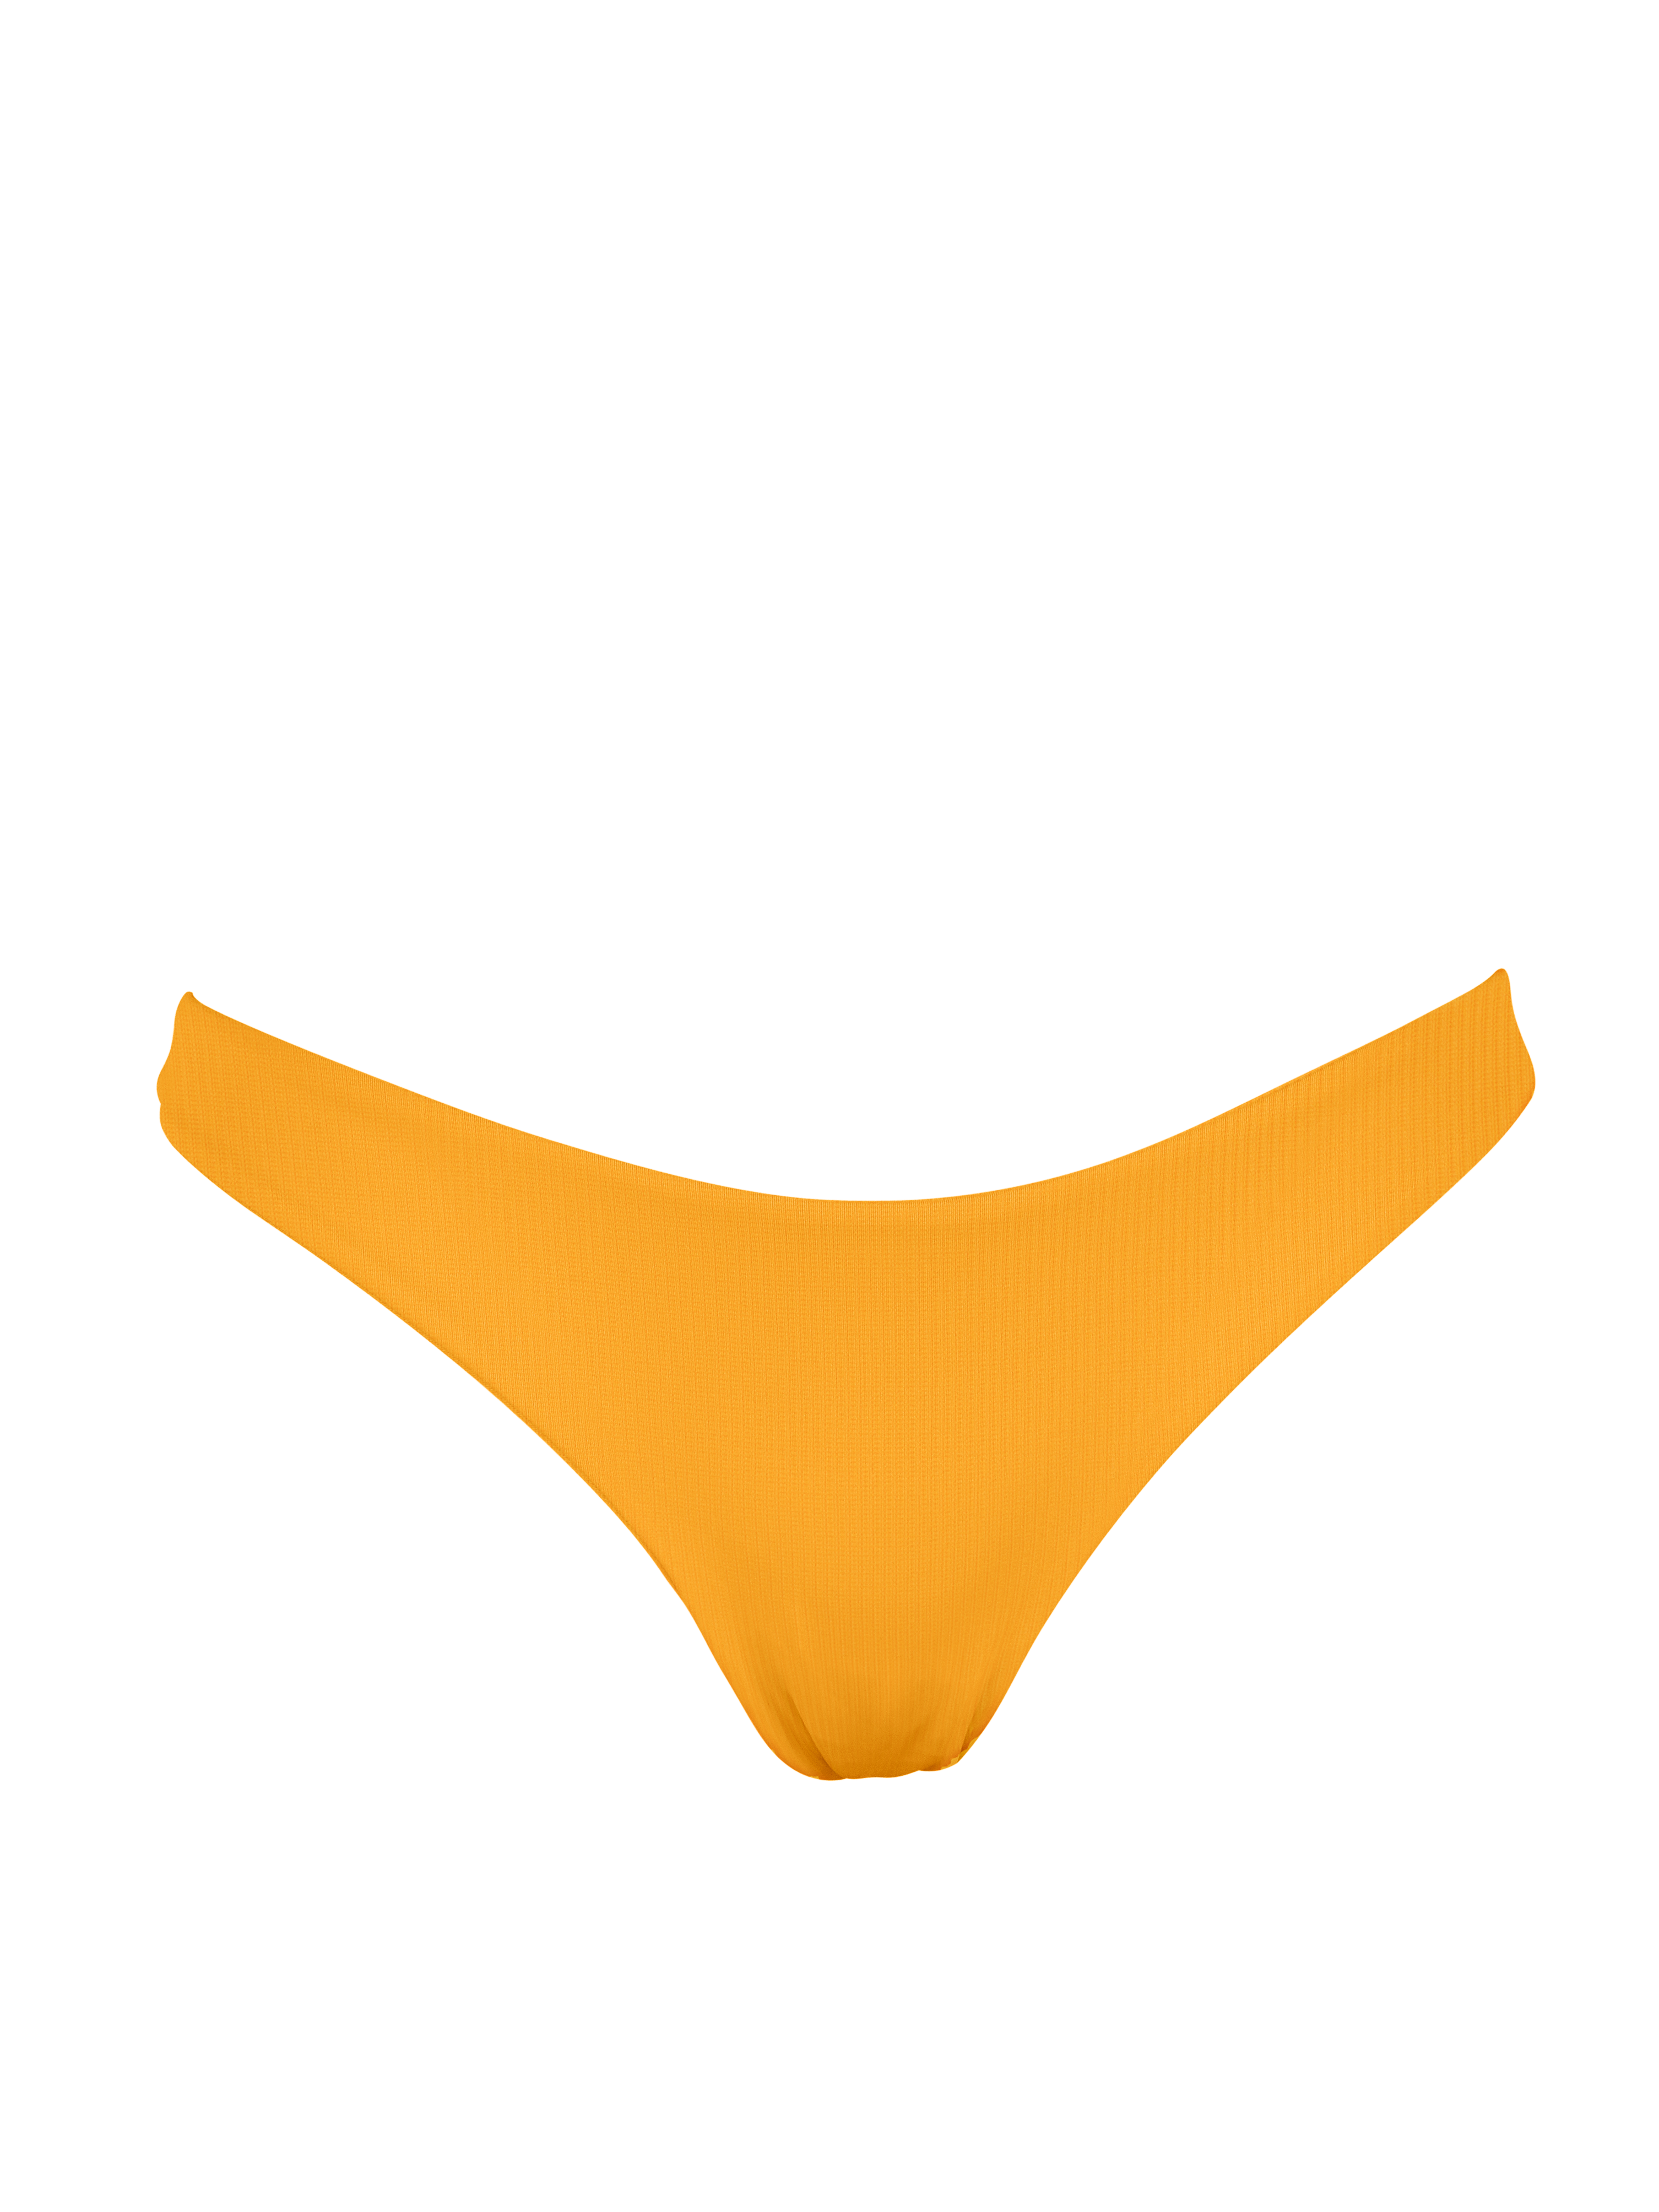 Produktbild Bikini Unterteil orangegelb ribbed Palmar